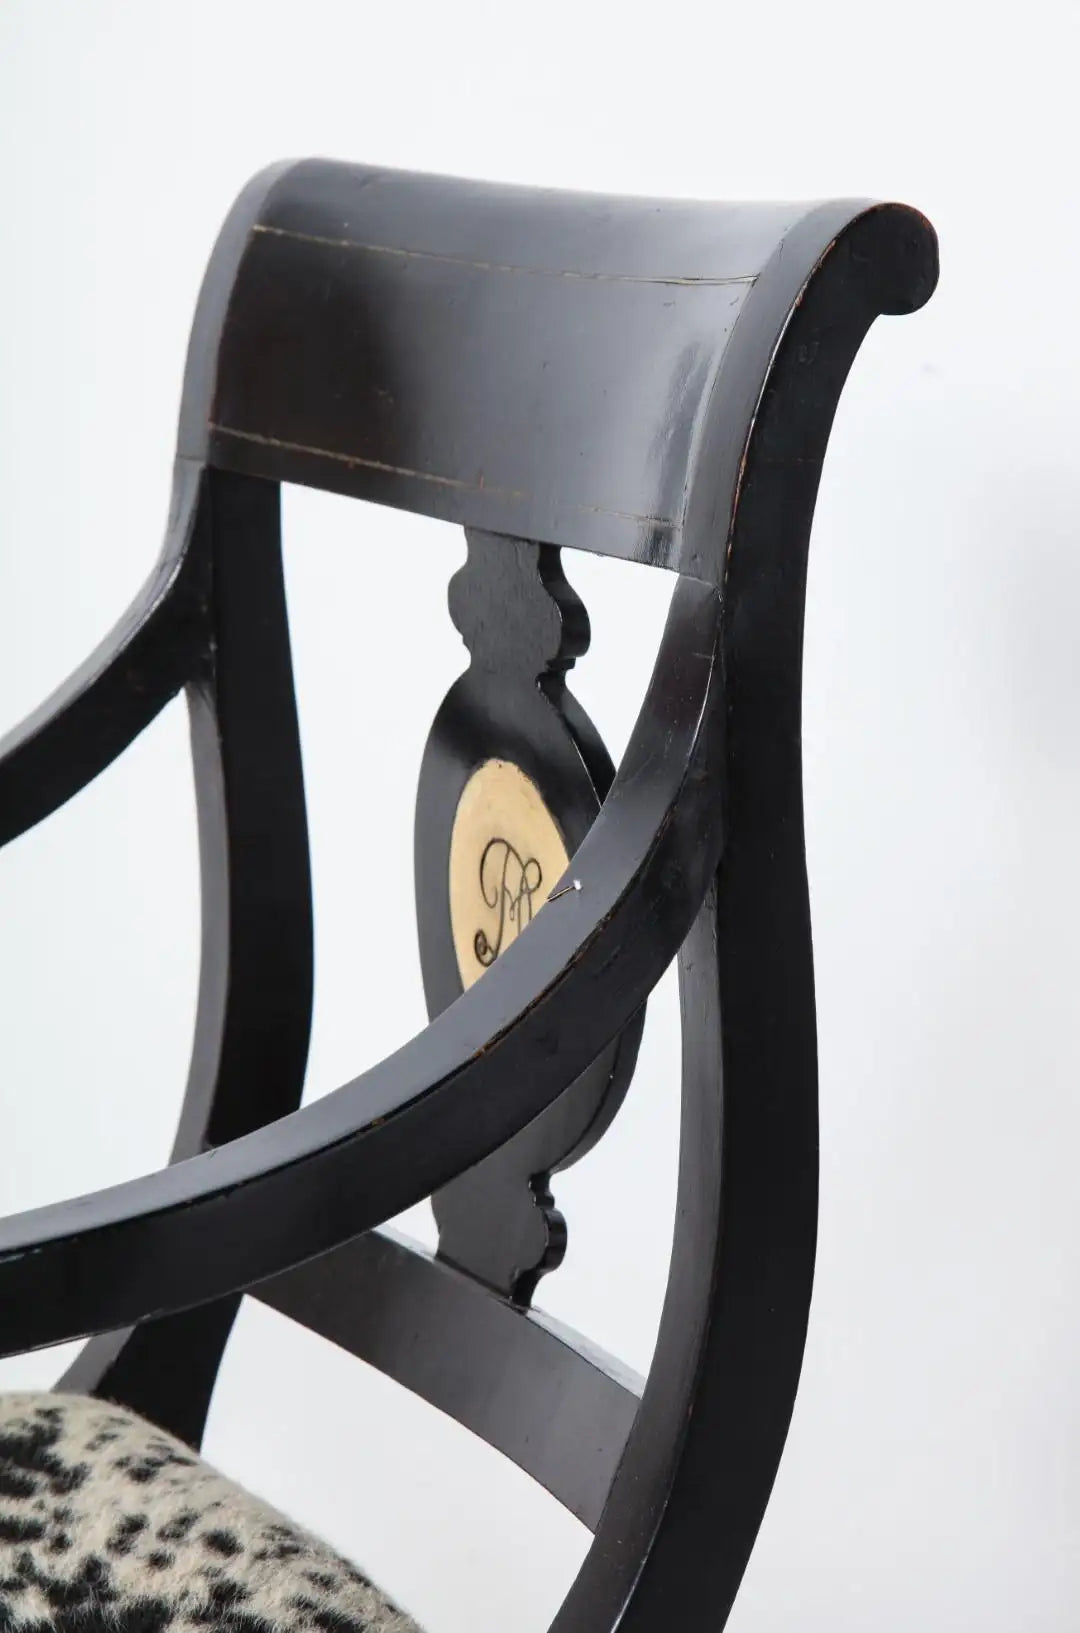 Pair of Ebonized English Regency Armchairs with Pony Seats and Monogram